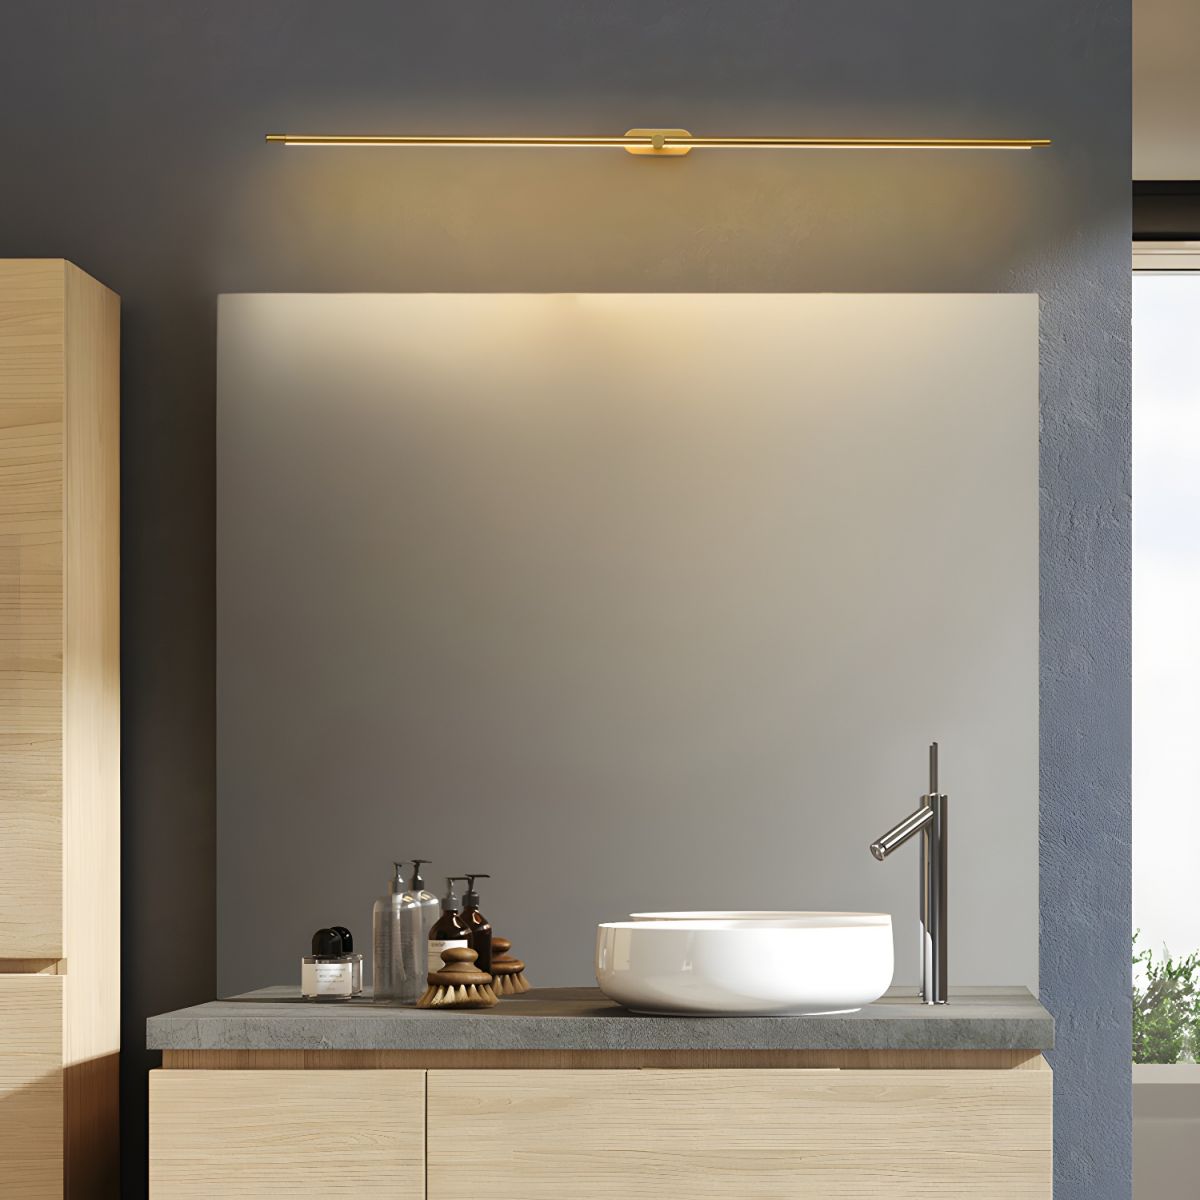 Modern Minimalist Style Metal Wall Light For Bathroom